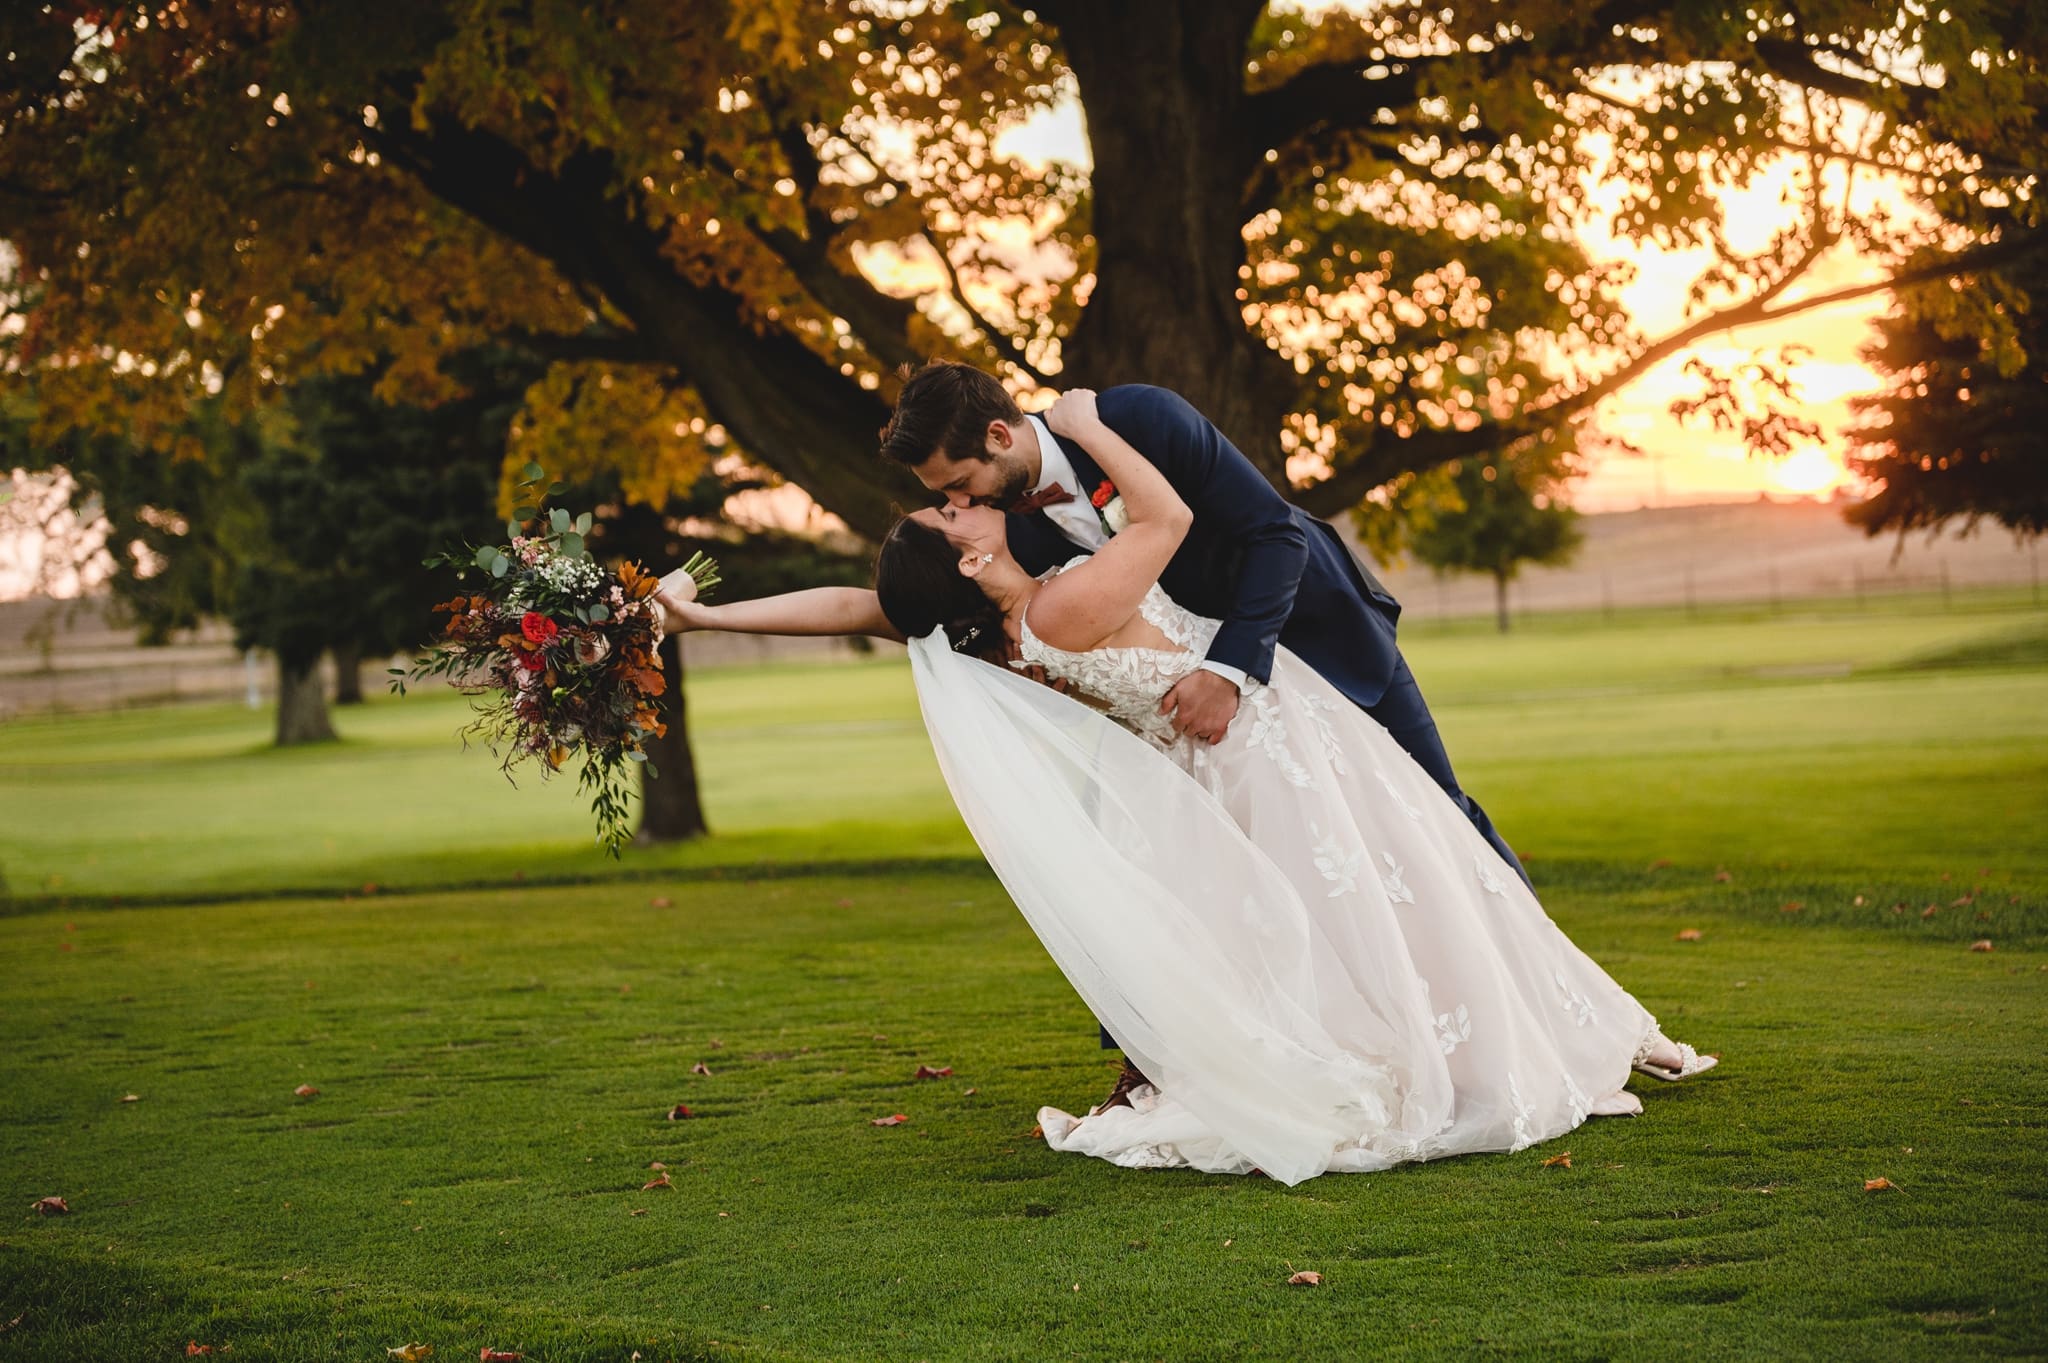 golf course wedding photos at lake lawn resort